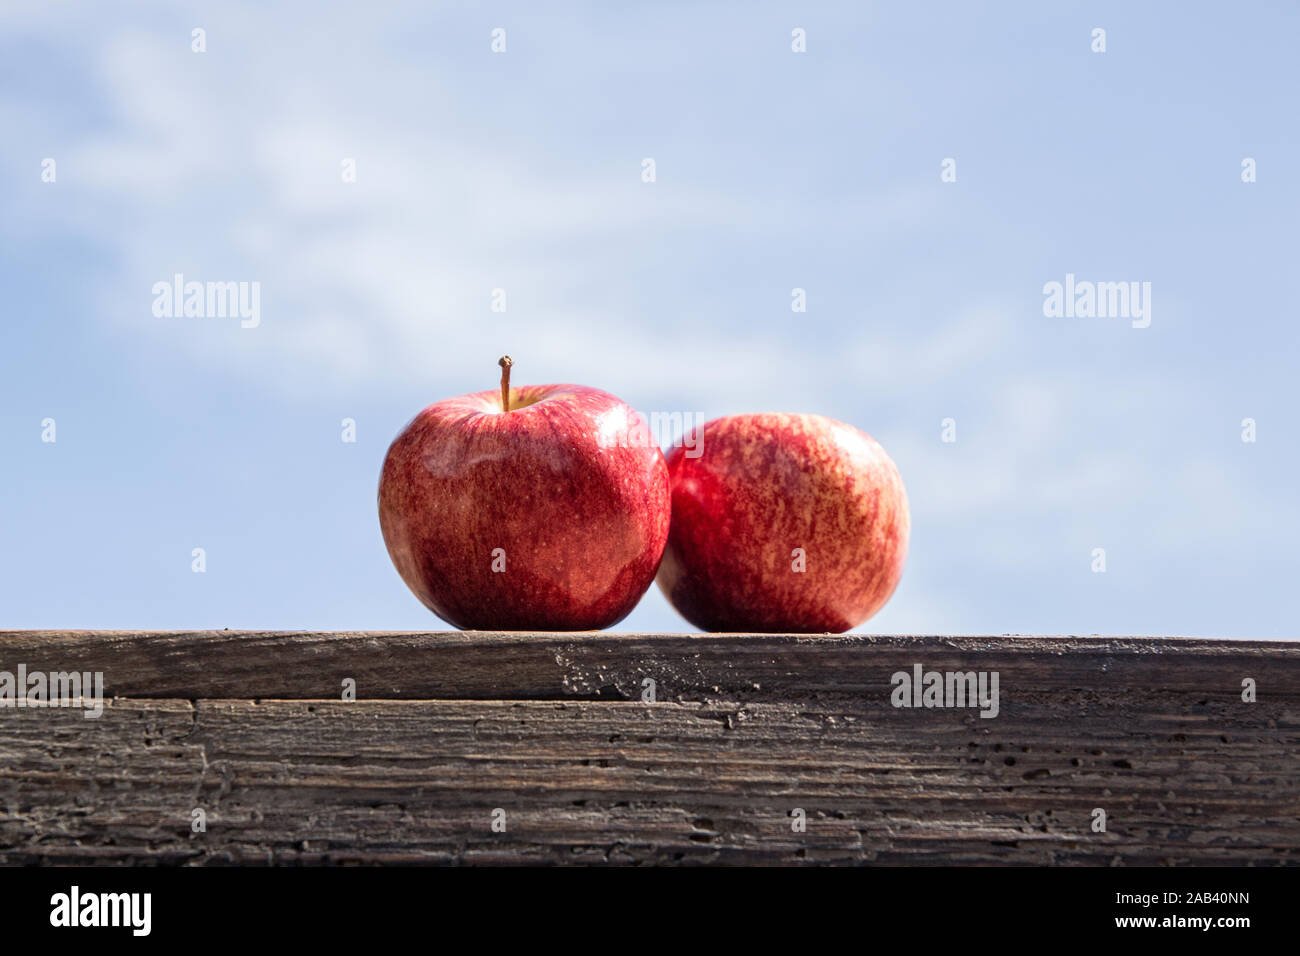 Zwei Äpfel auf einer Kiste vor blauem Himmel |Two apples on a crate in front of blue sky| Stock Photo